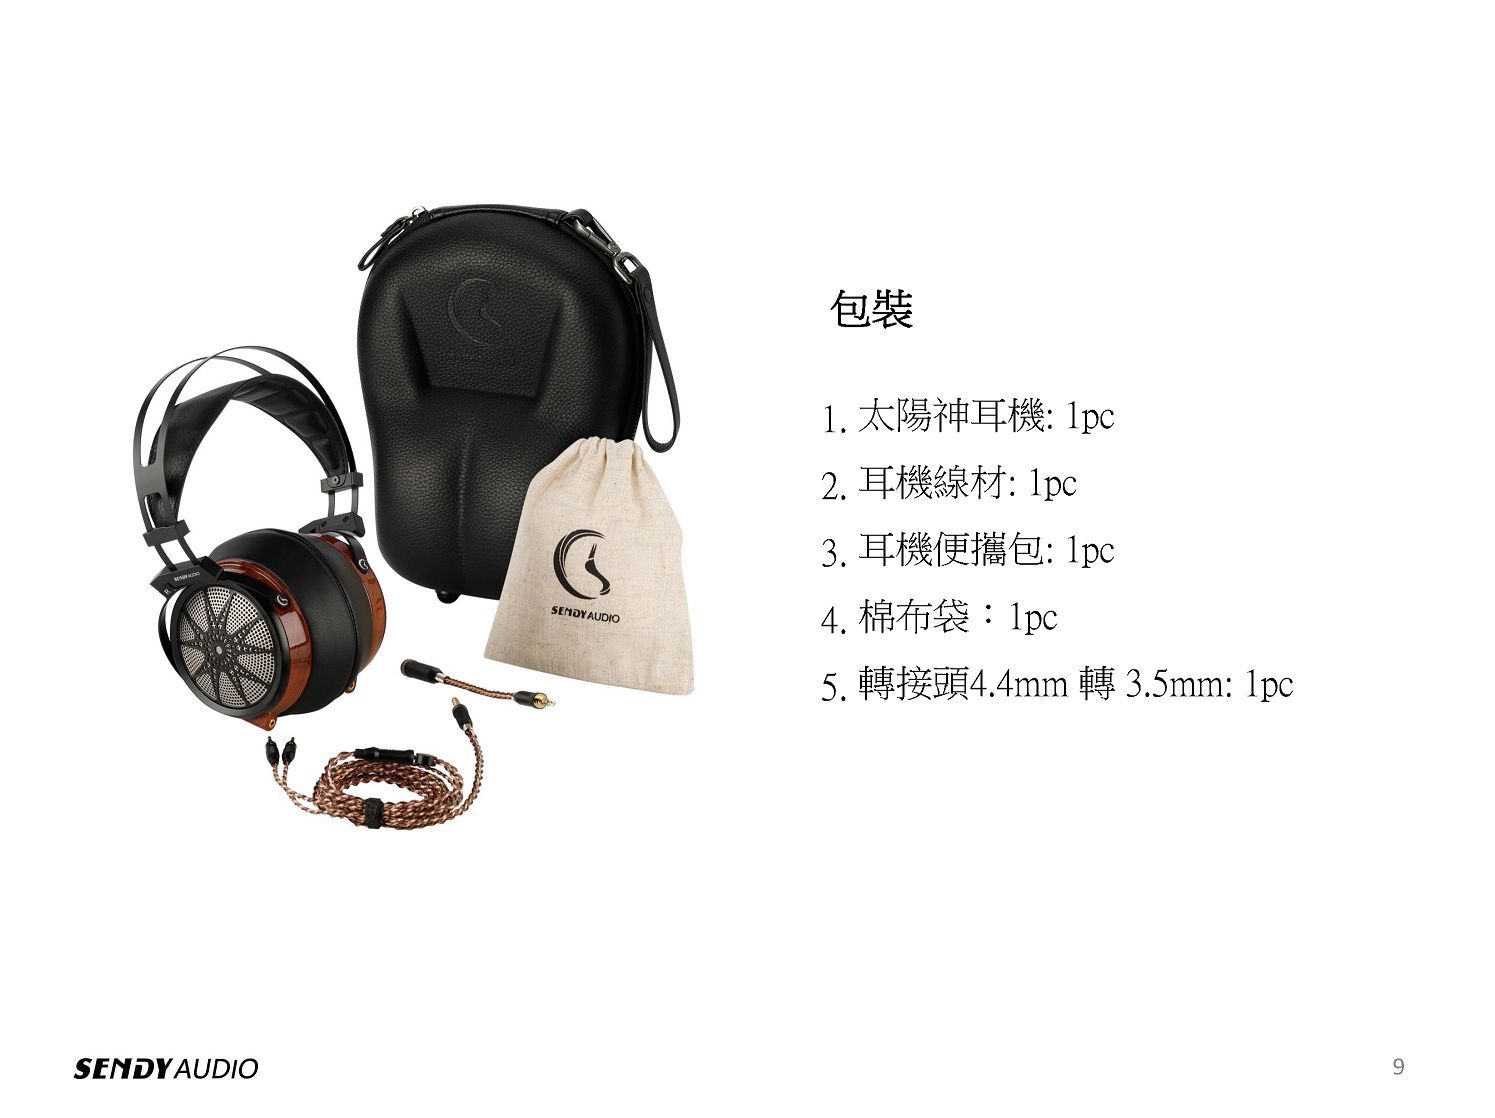 SENDY AUDIO包裝1. 太陽神耳機 2. 耳機線材: 3.耳機便攜包: 1pc4. 棉布袋:1pc5. 轉接頭4.4mm 轉 3.5mm: 1pcSENDY AUDIO6